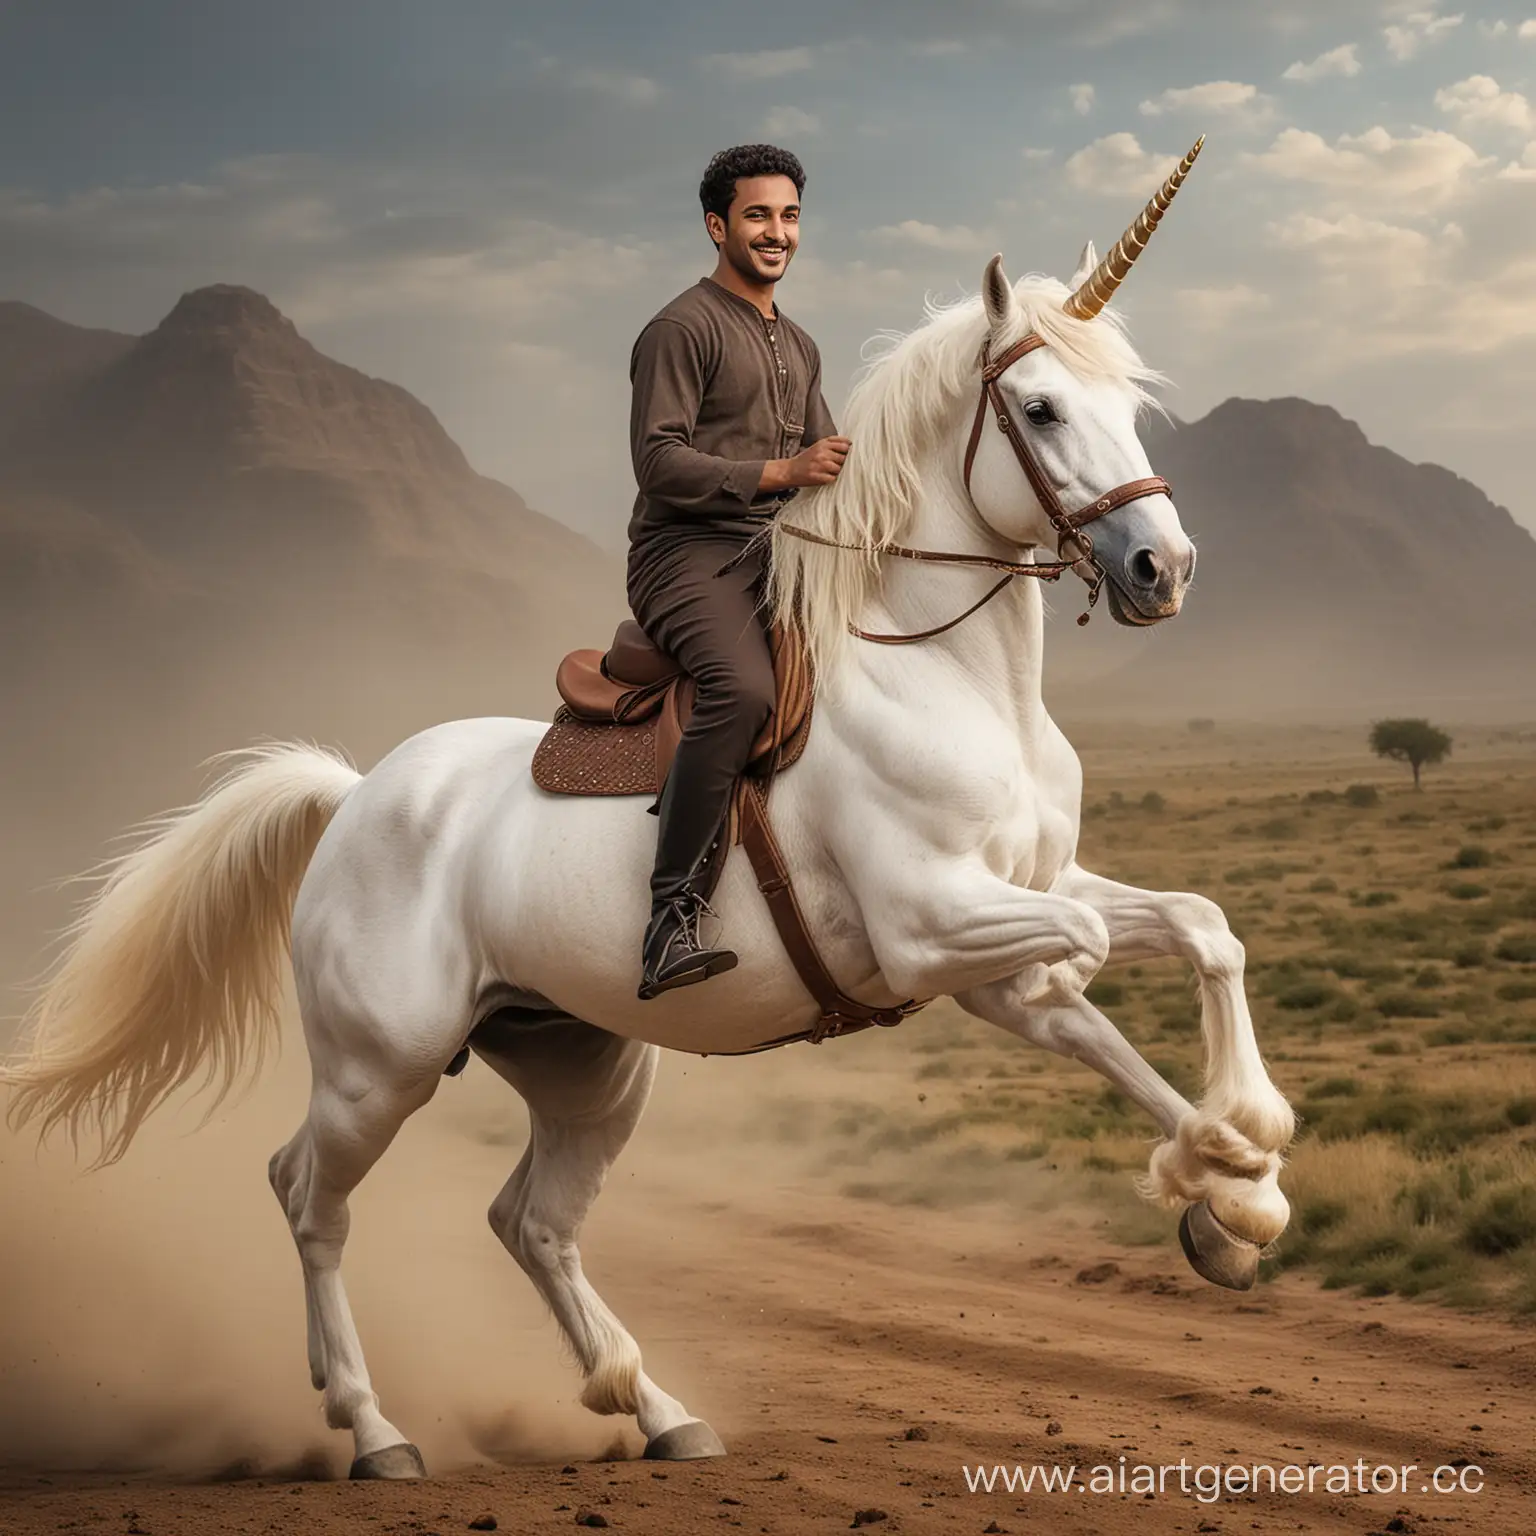 Ibrahim-Adyg-Joyfully-Rides-Unicorn-Across-Kerdym-Landscape